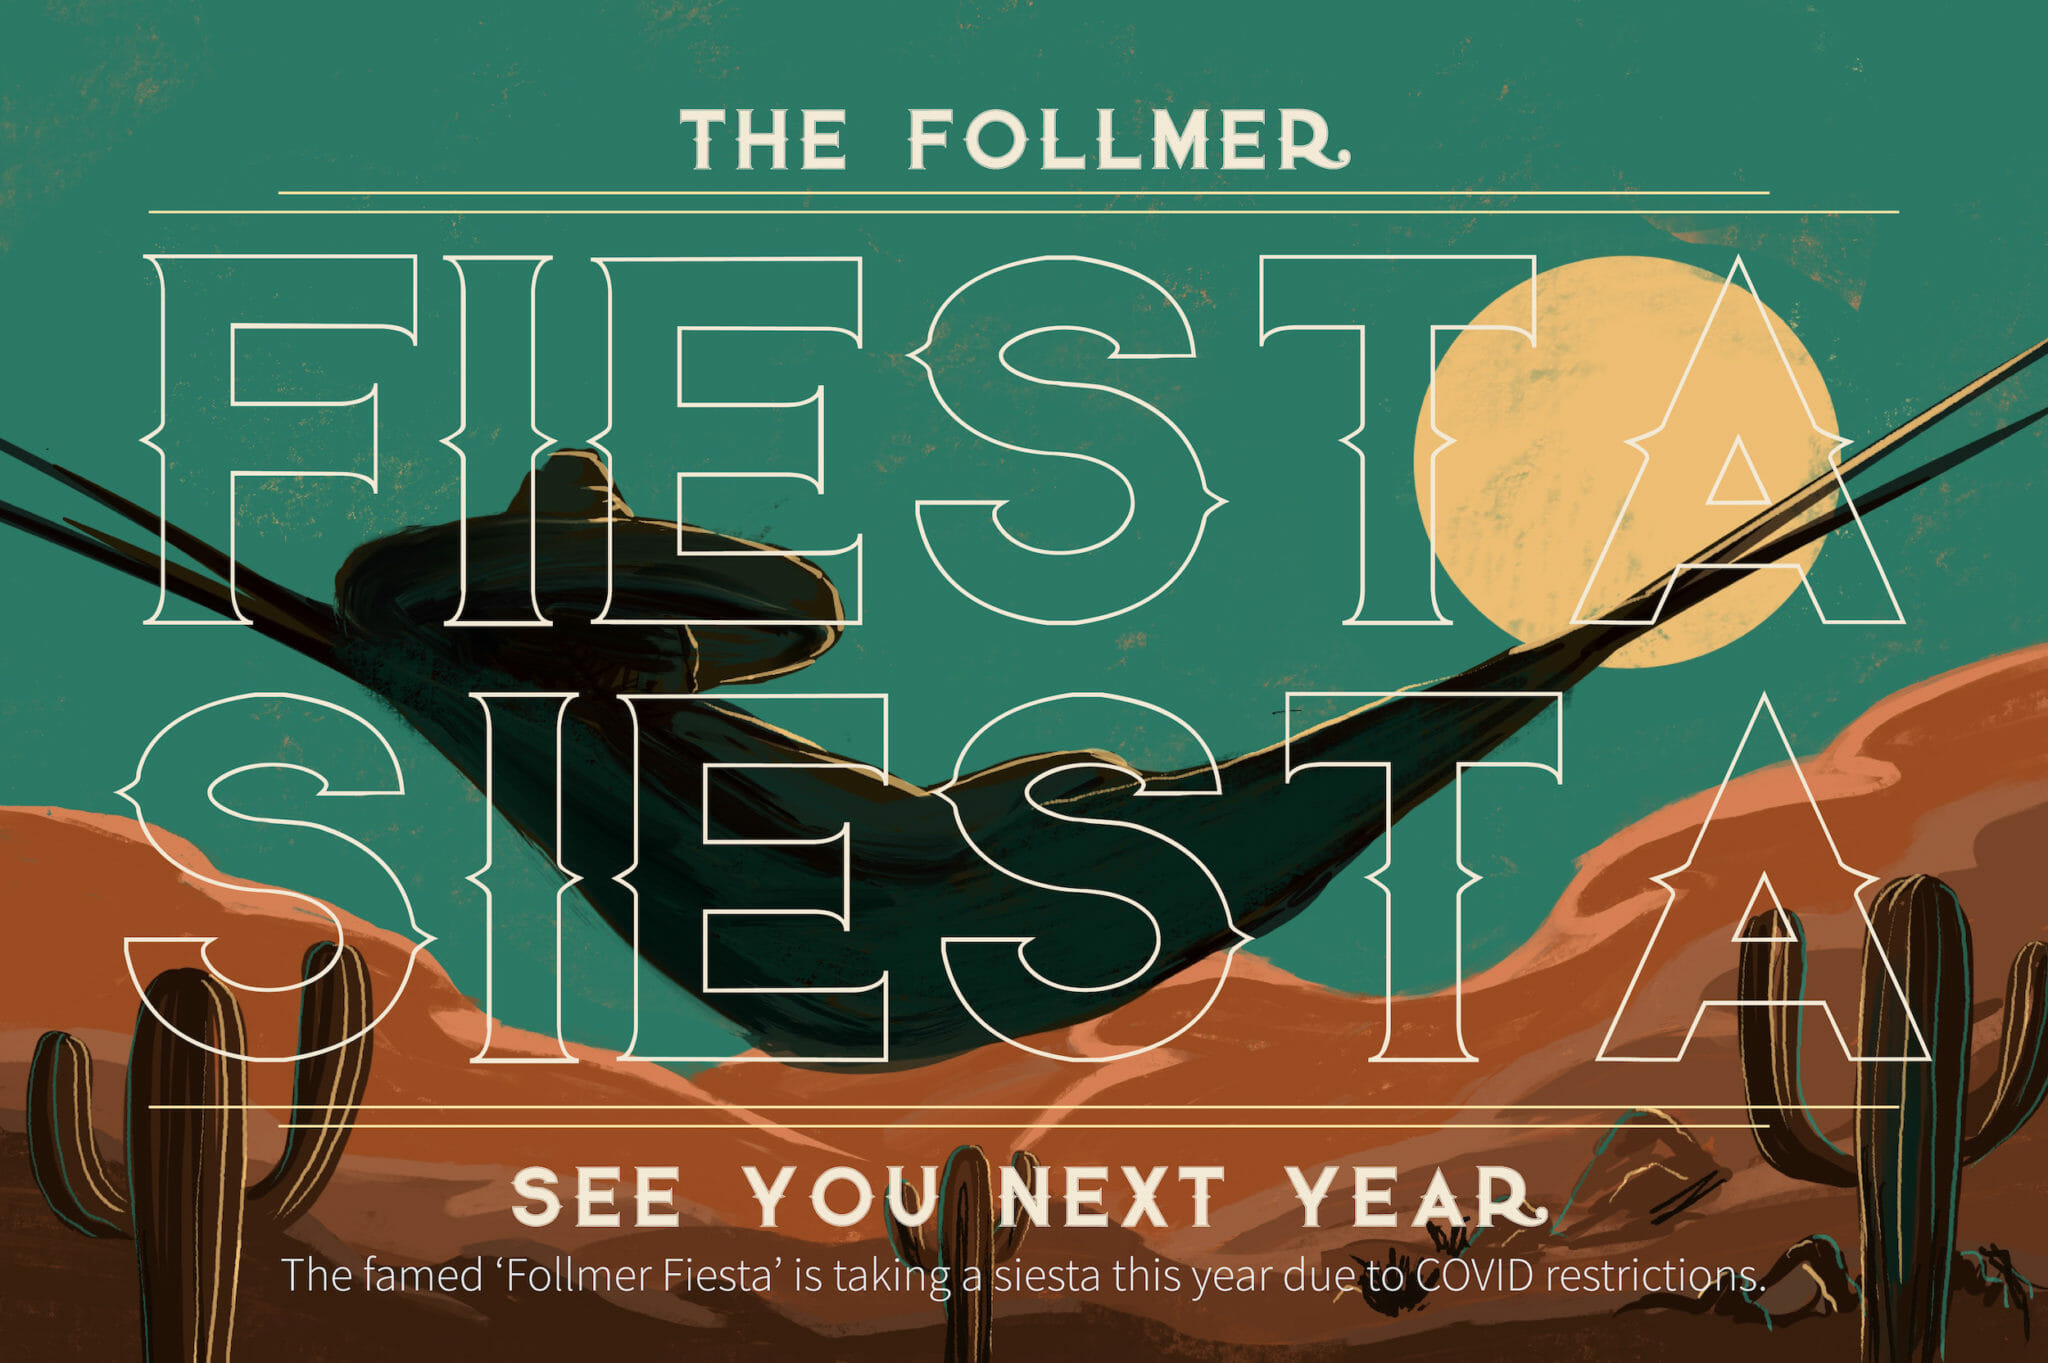 Follmer Fiesta, artwork created by Šek Design Studio